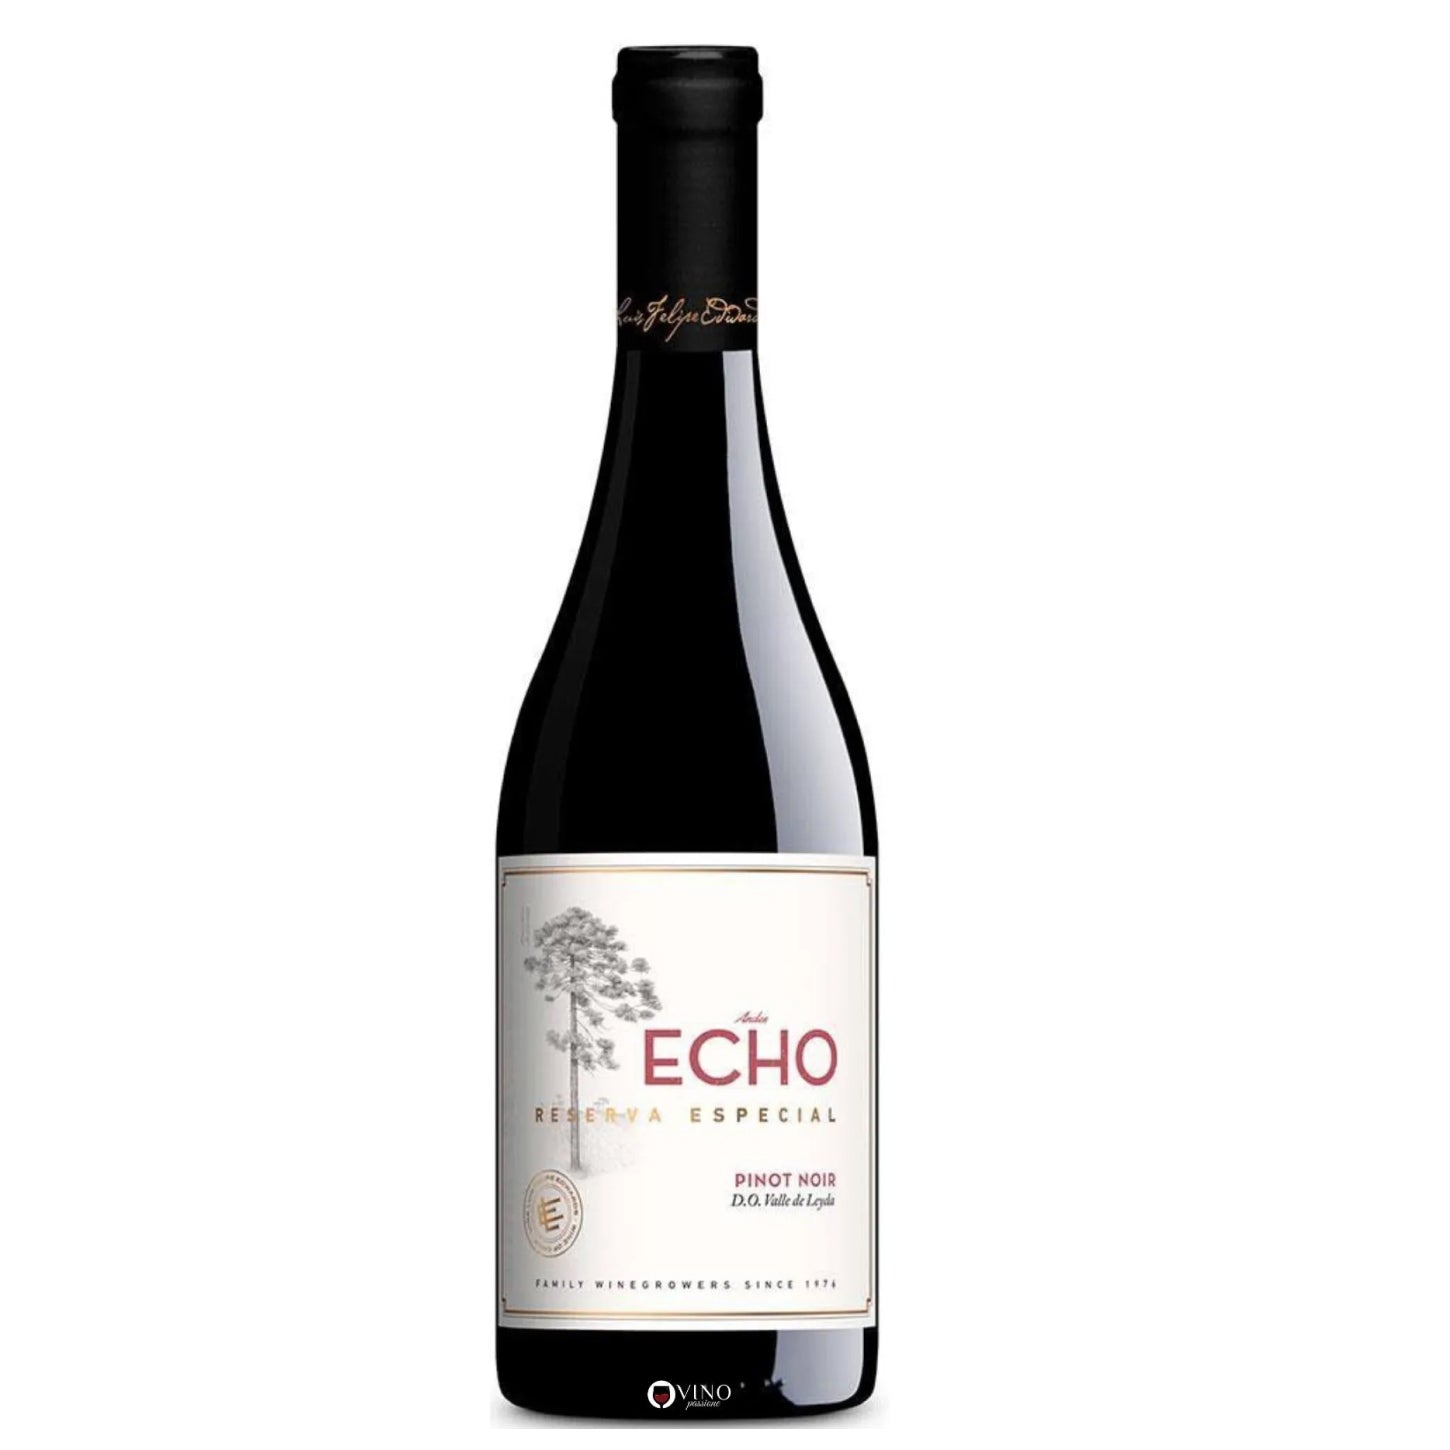 Andes Echo Reserva Especial Pinot Noir